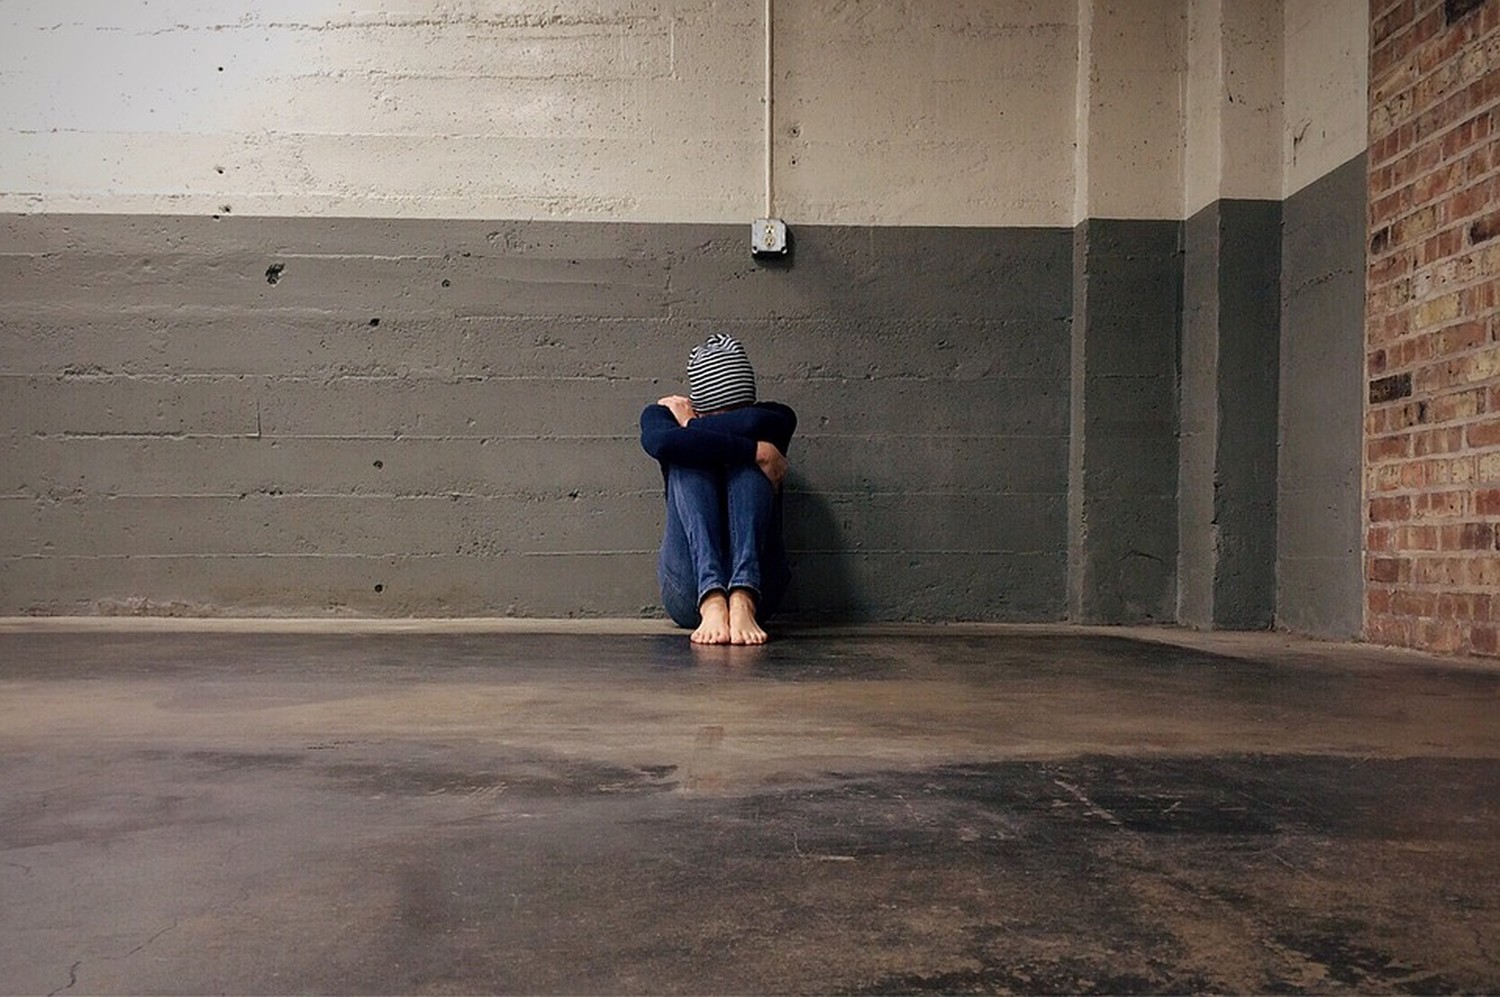 Male-Sadness-Homeless-Person-Bullied-Alone-Hiding-1821412-2.jpg